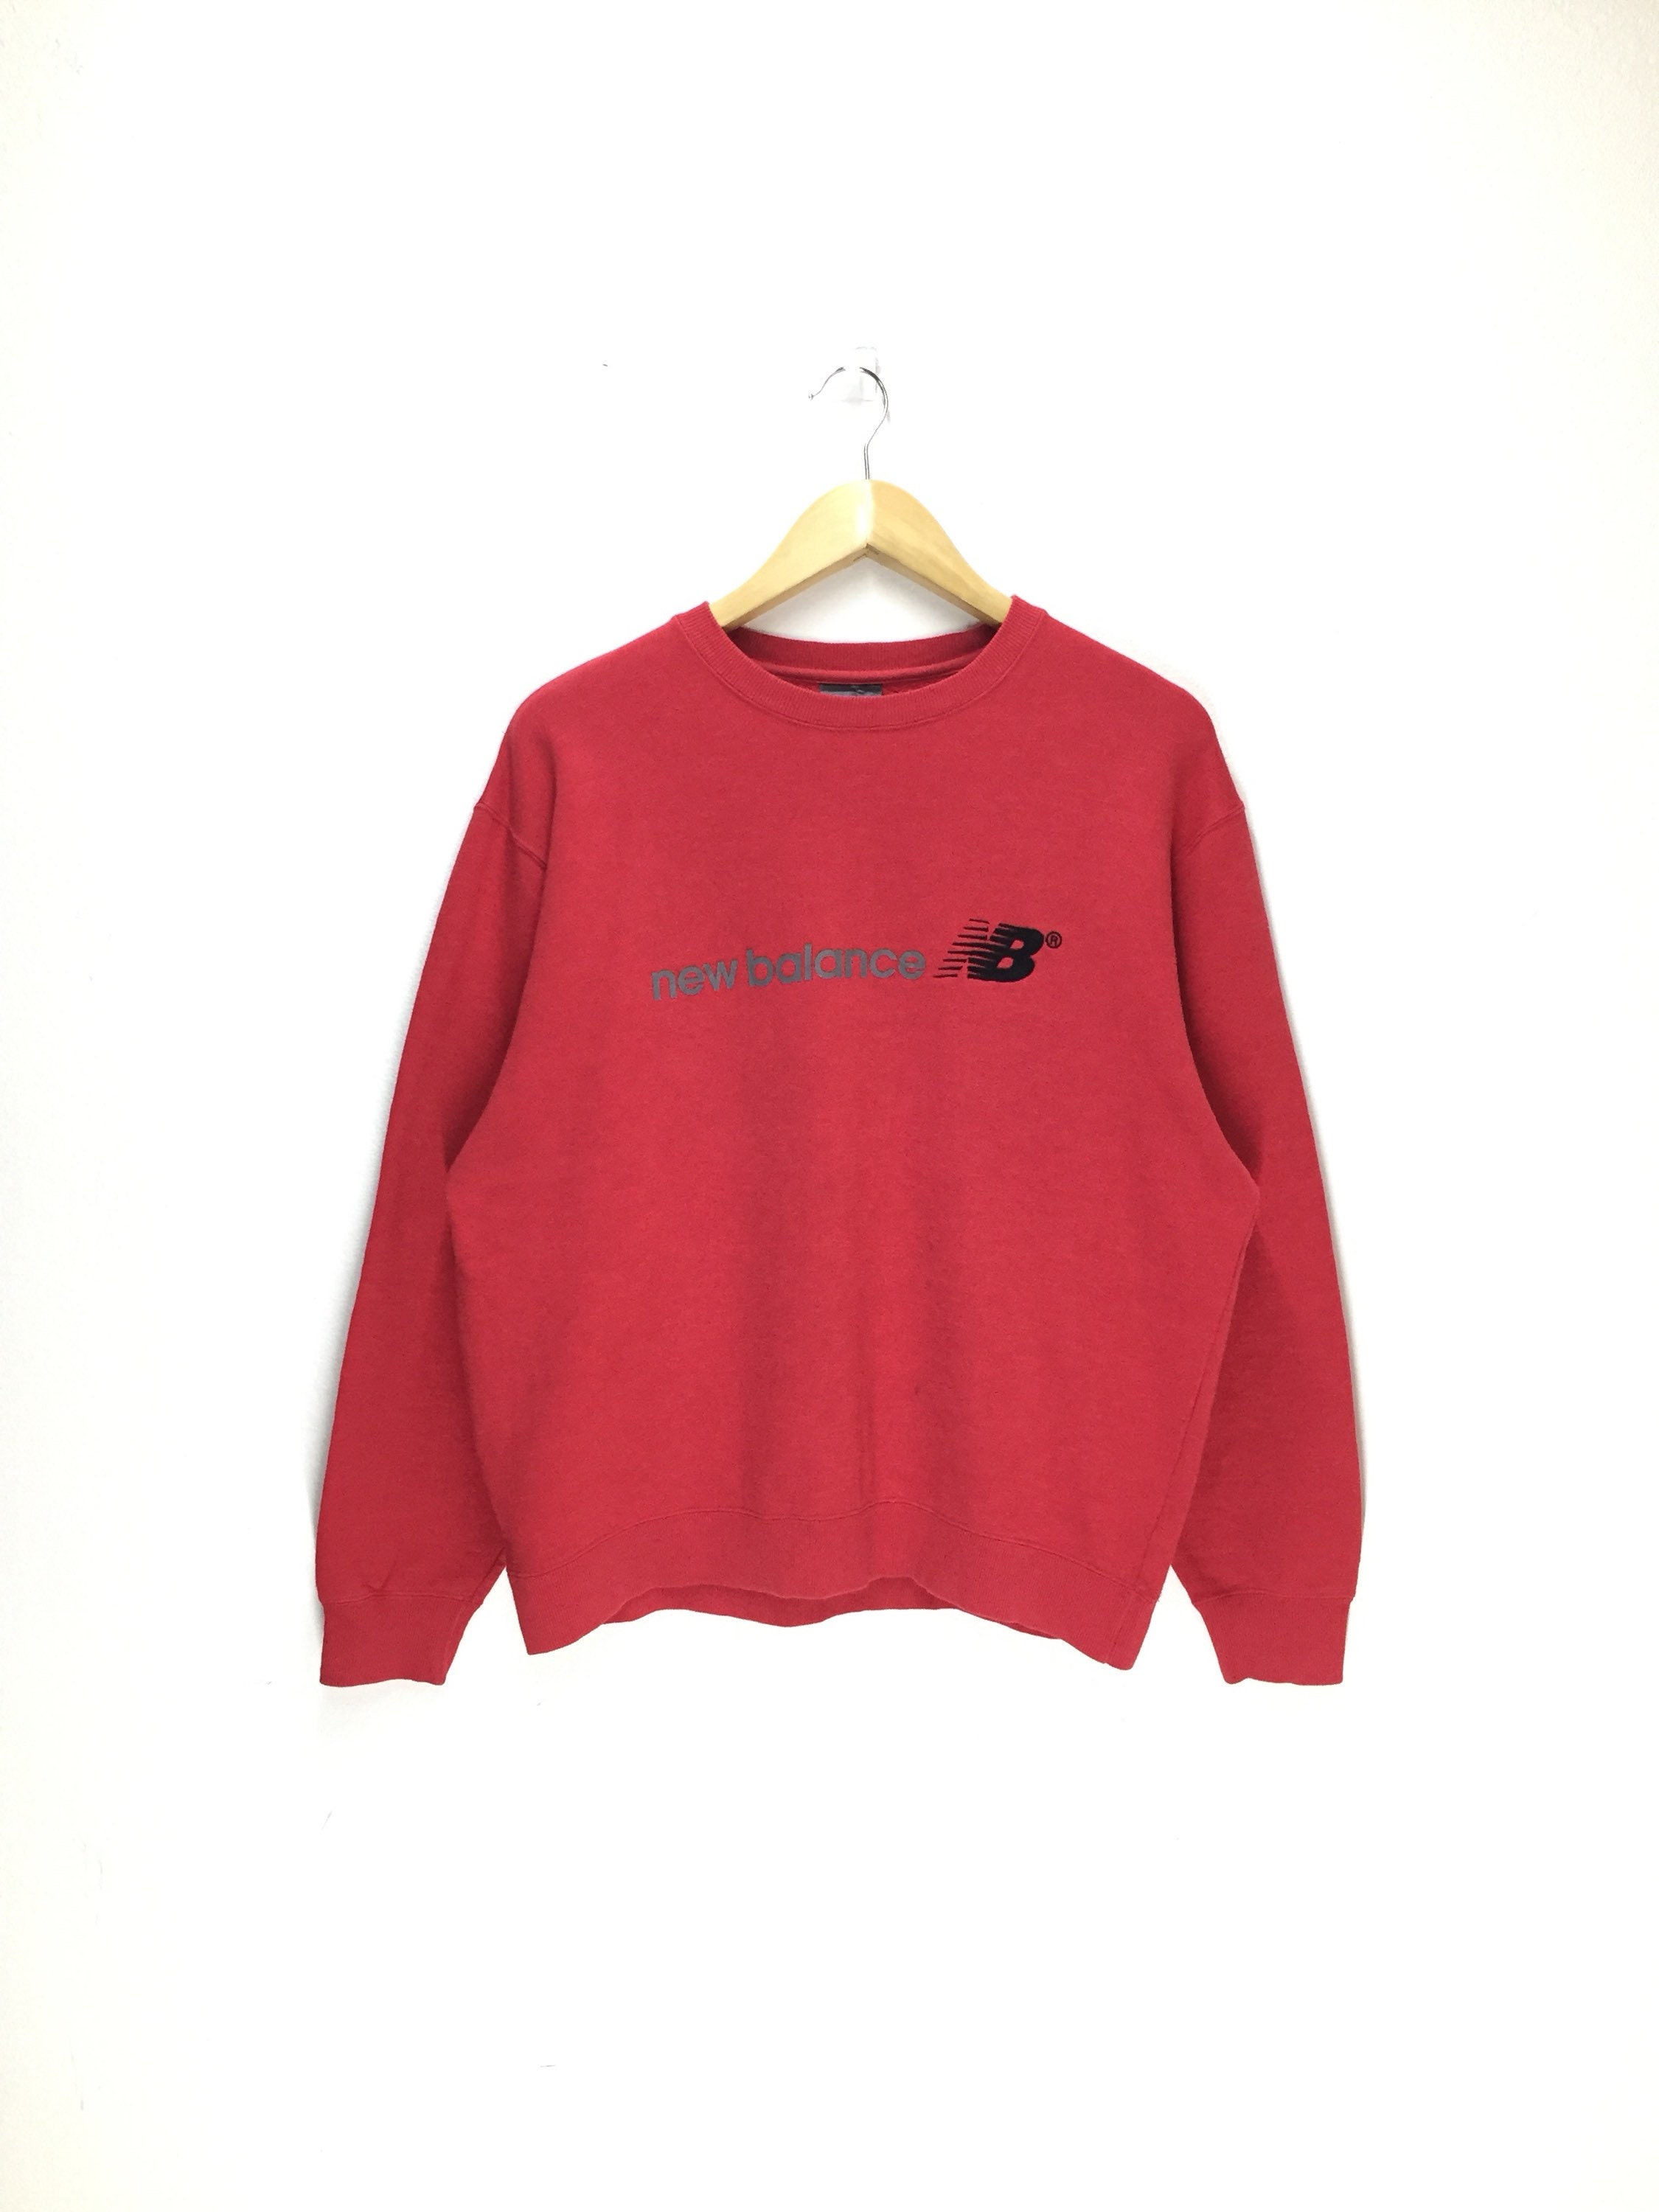 Rare Vintage New Balance Sweatshirt Jumper / Pullover / Red | Etsy